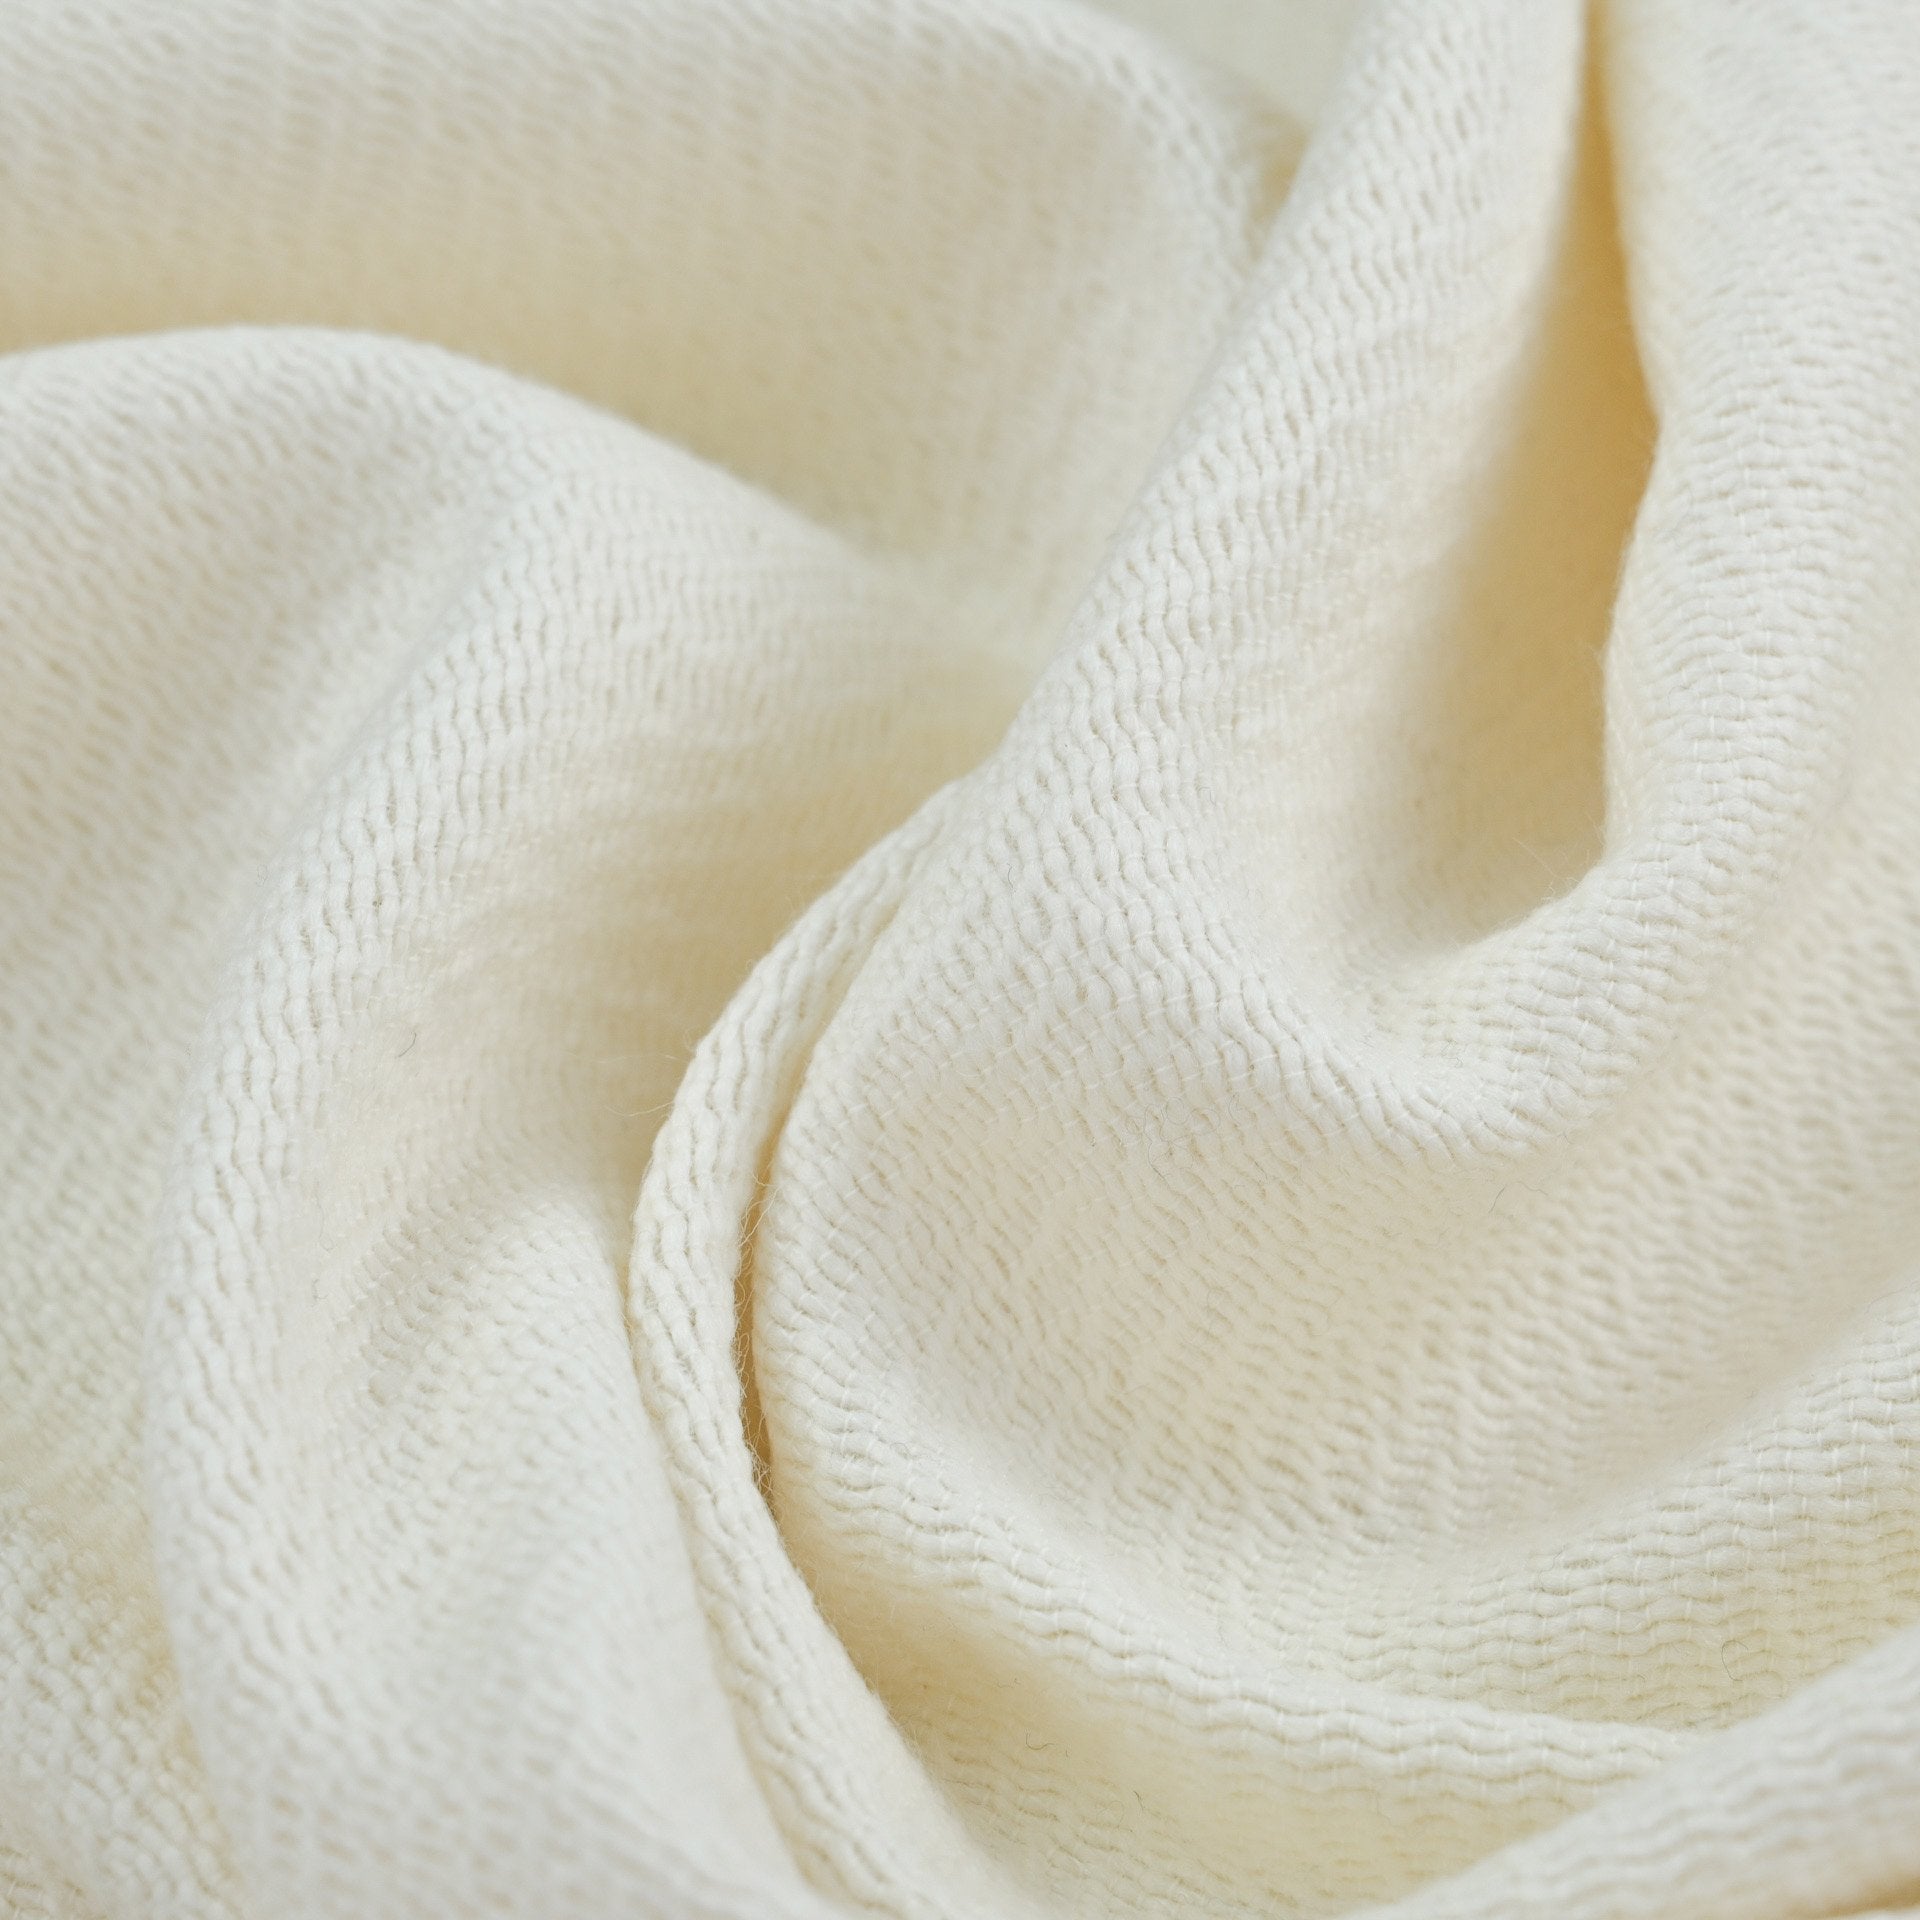 Siegfried wool fabric - wool white